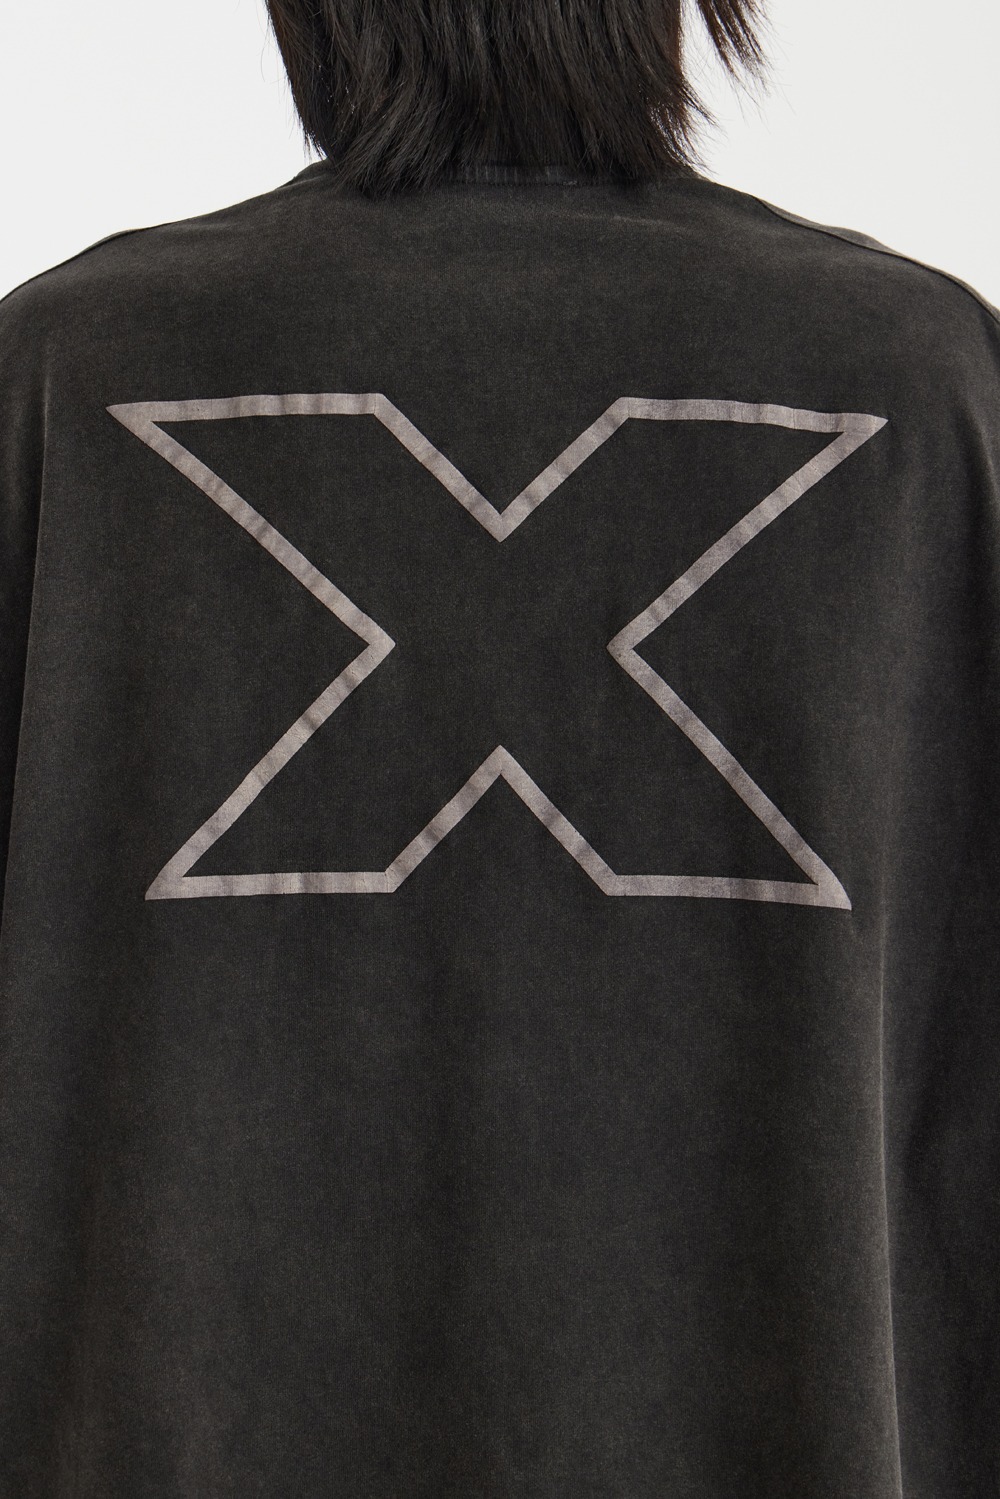 X` Layered T-Shirt-Faded Black